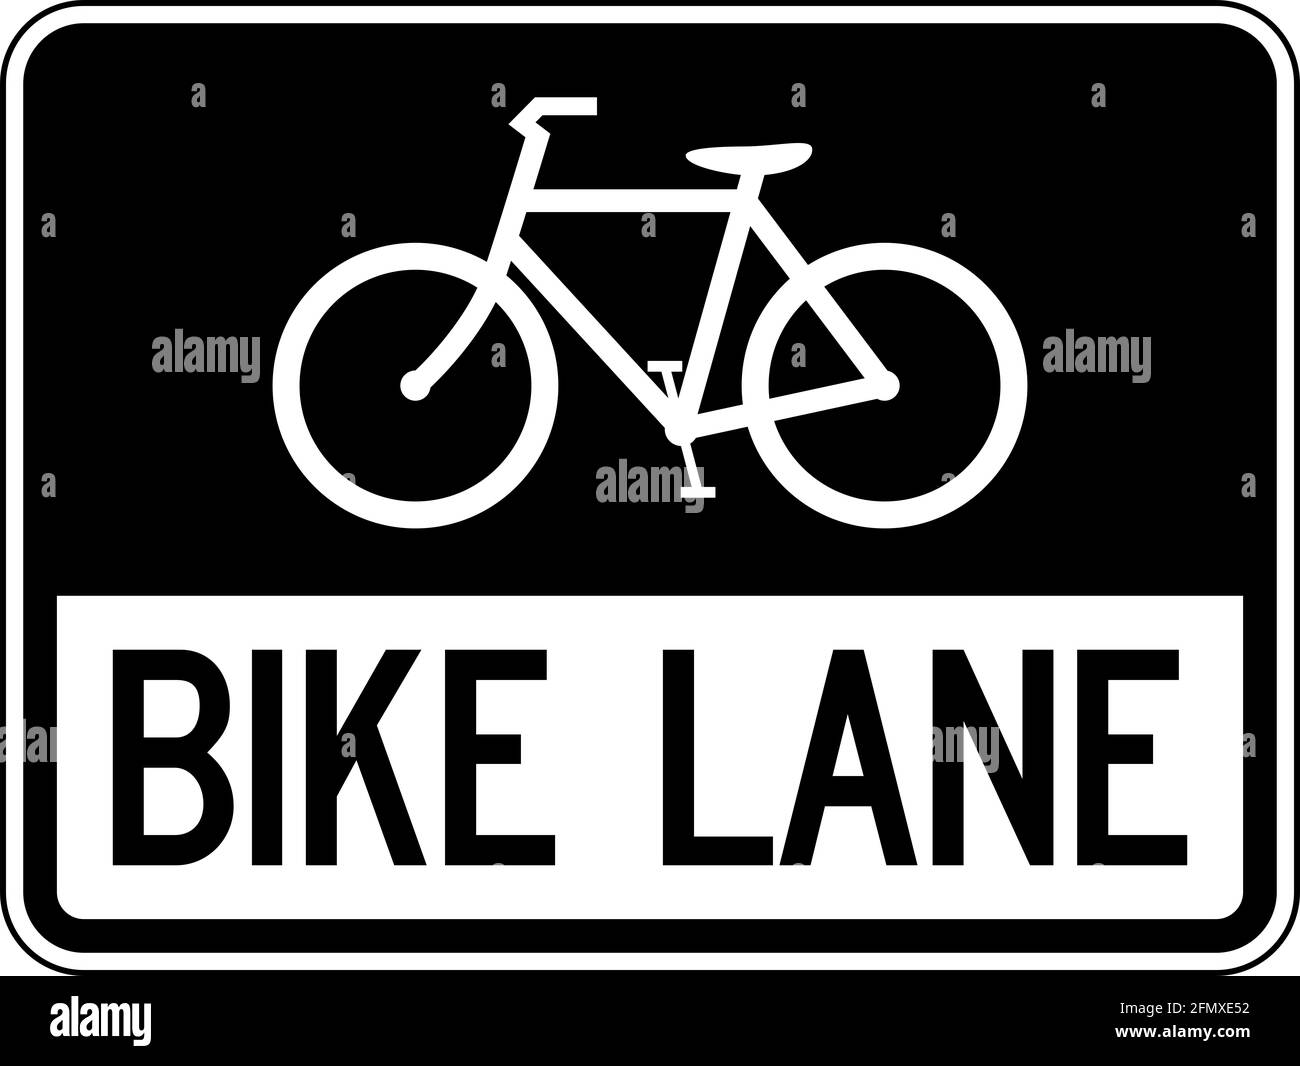 Bike Lane Official US Road Sign Illustration Stock Photo